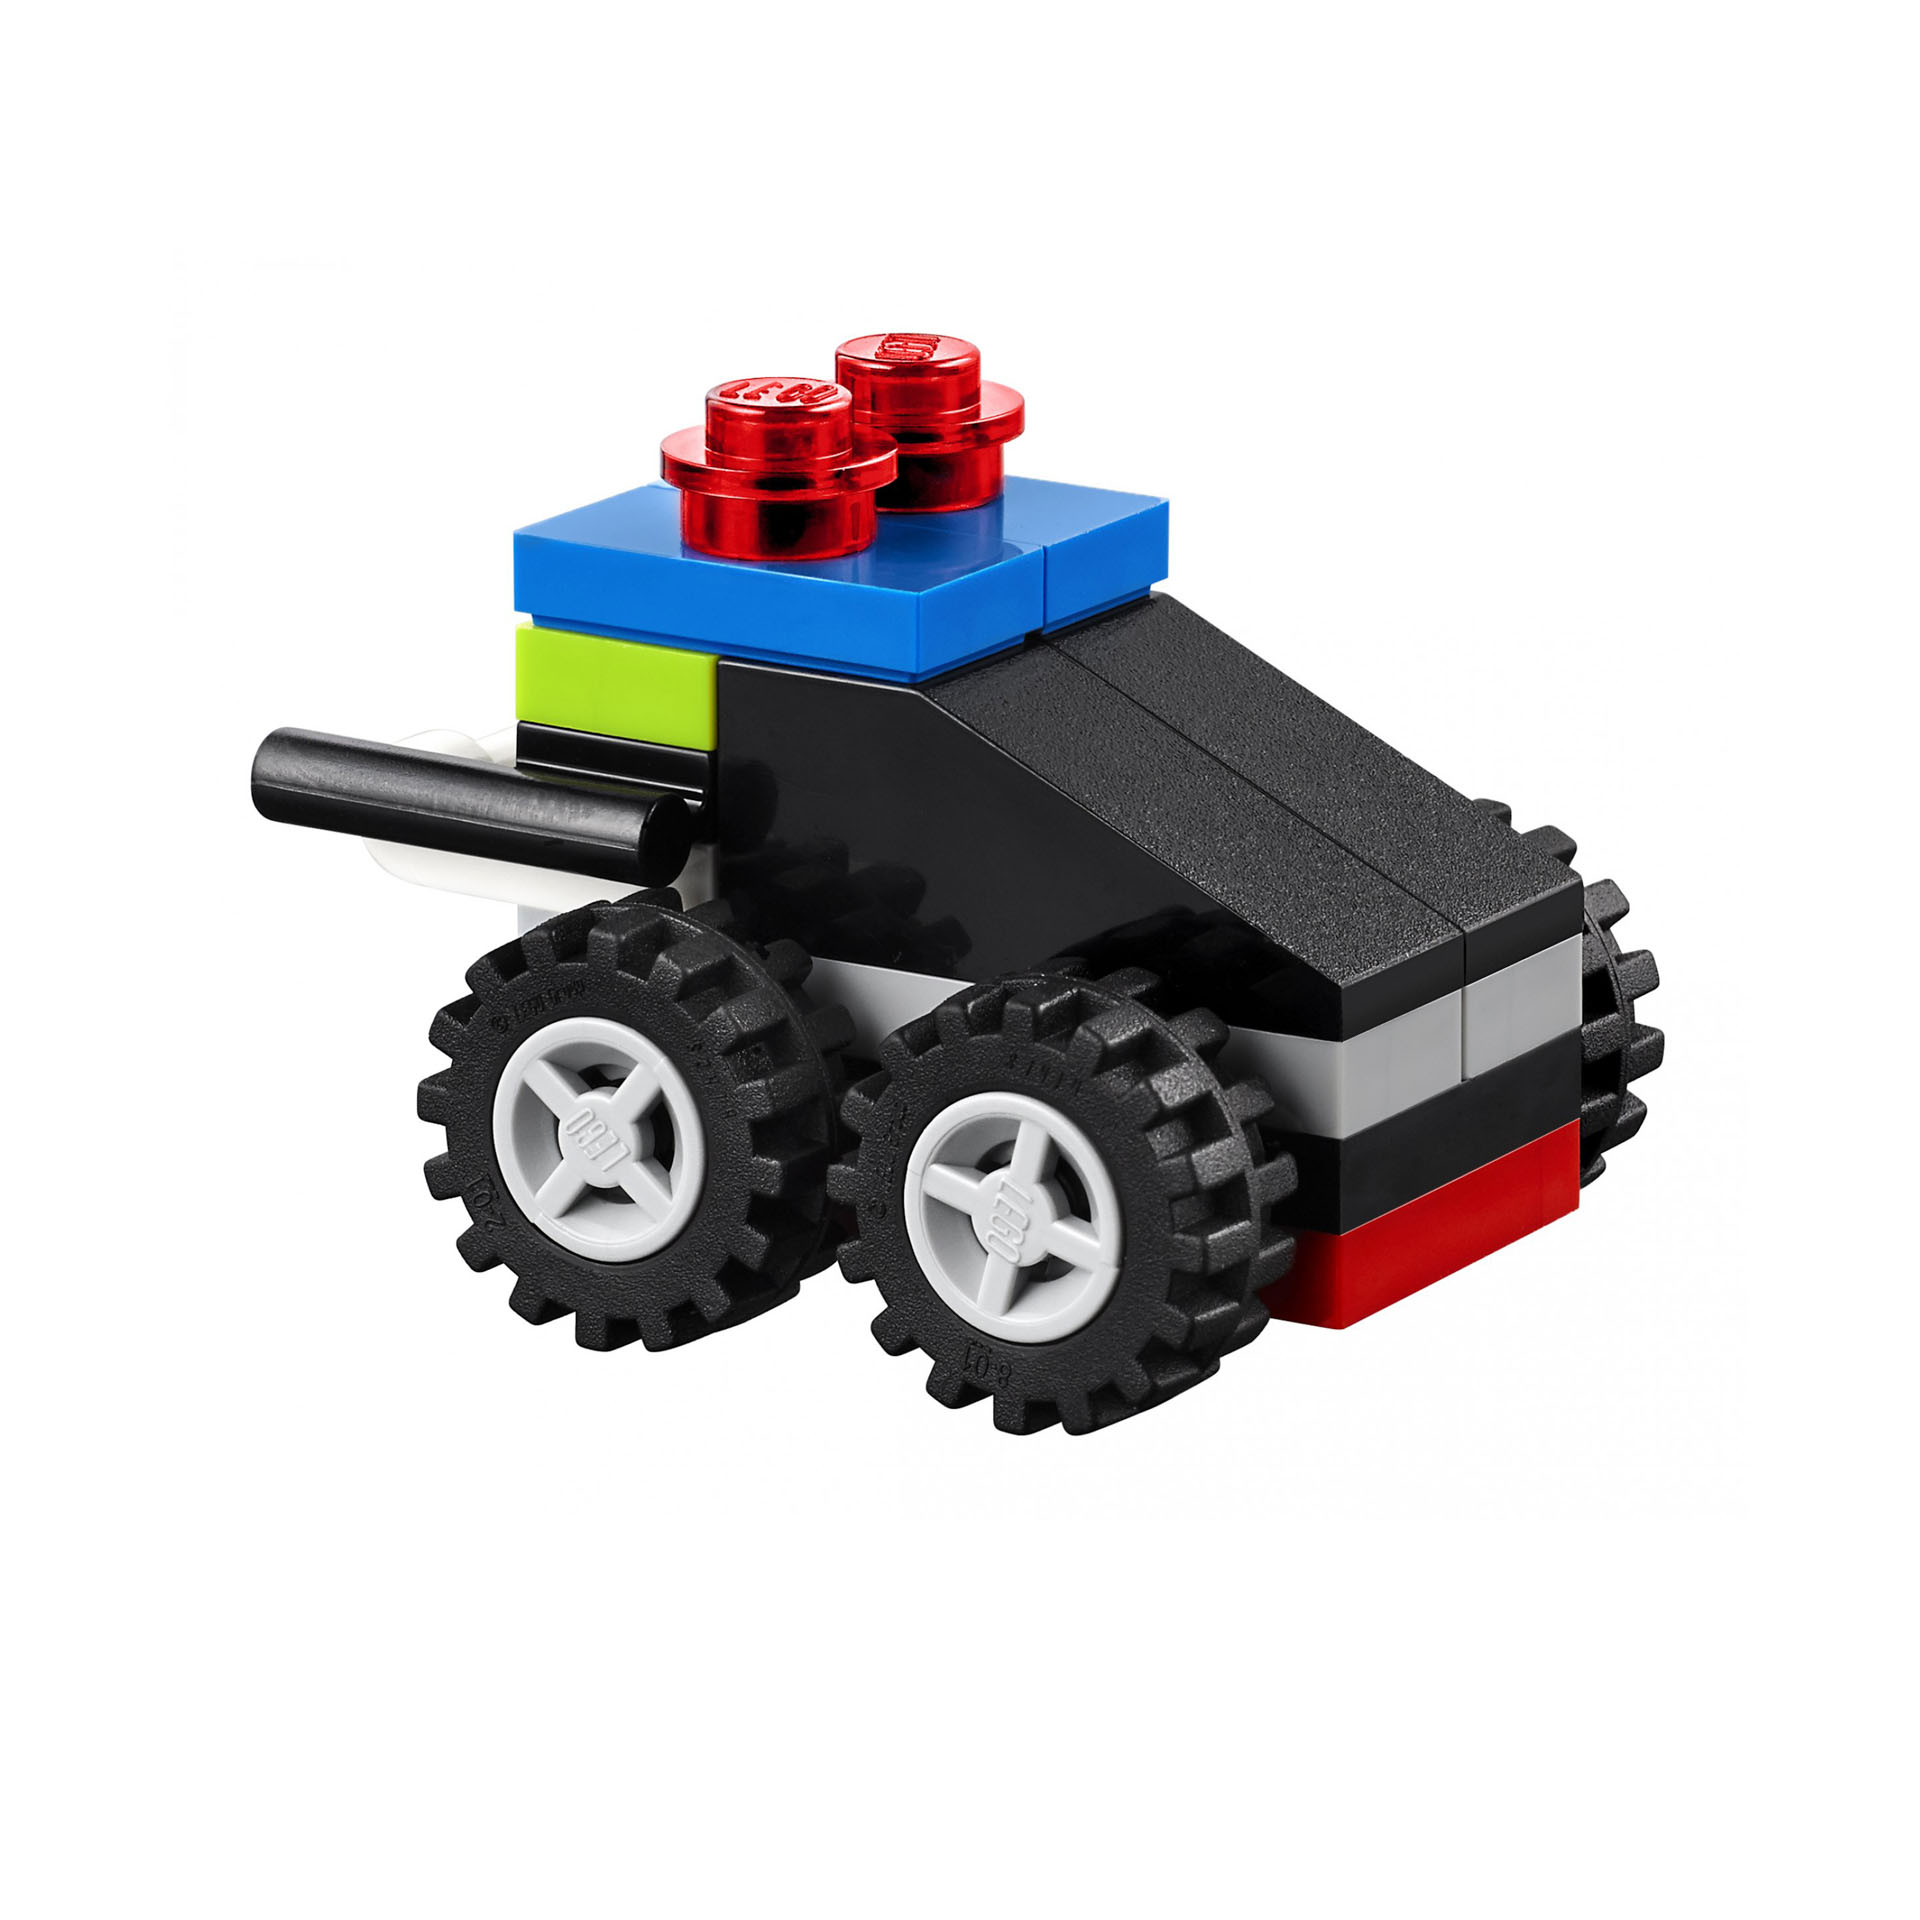 Lego Friends 30499 Creator Robot Veicolo 30499, , large